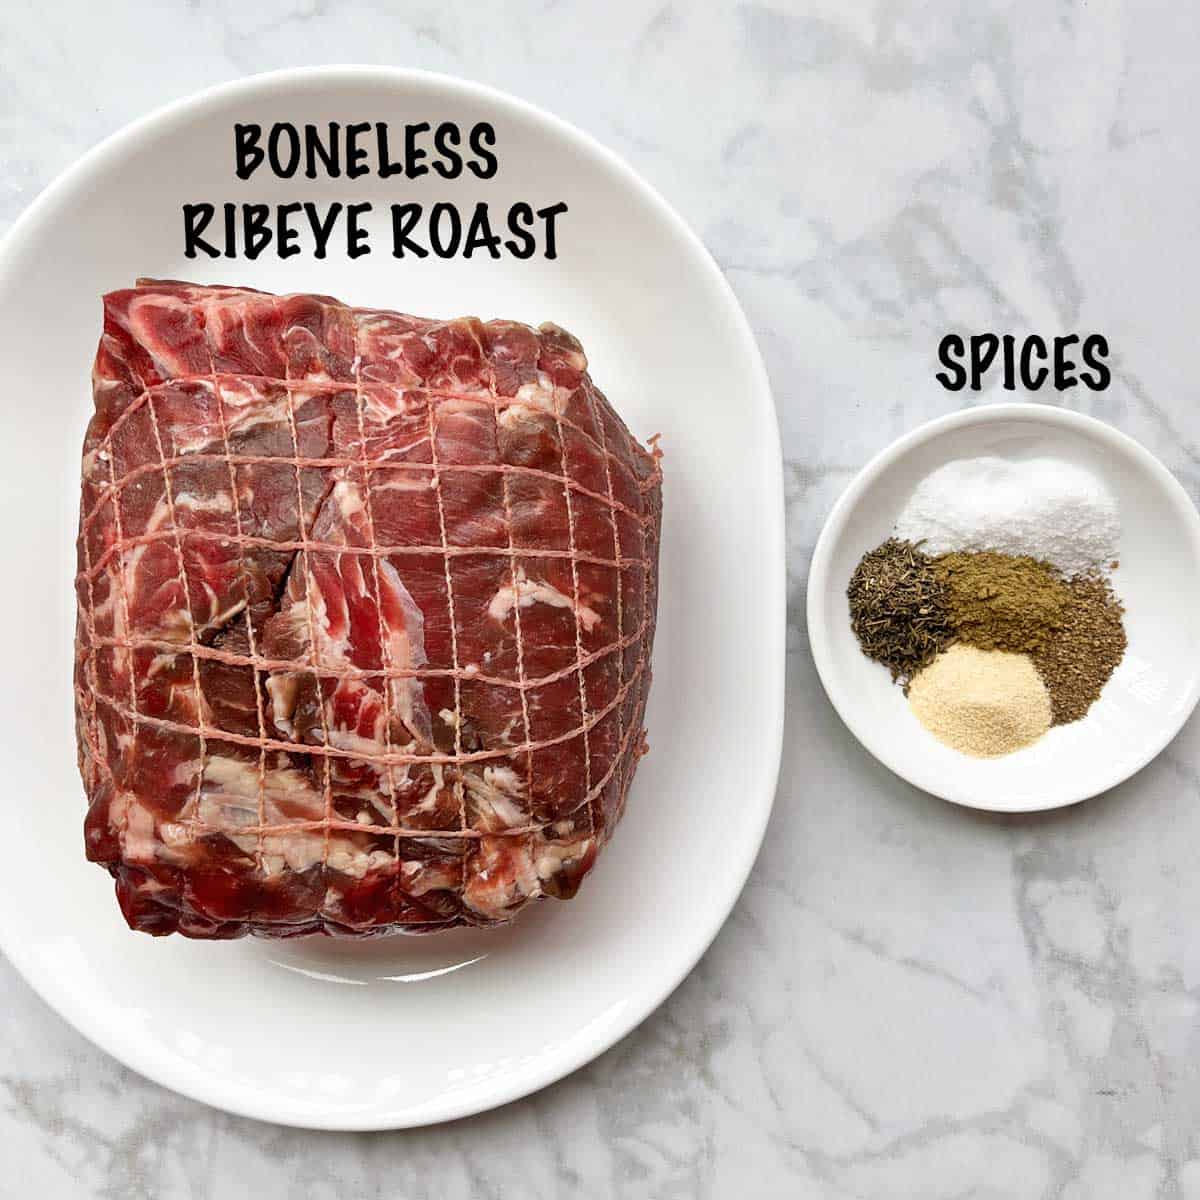 The ingredients needed to cook a ribeye roast (boneless prime rib).